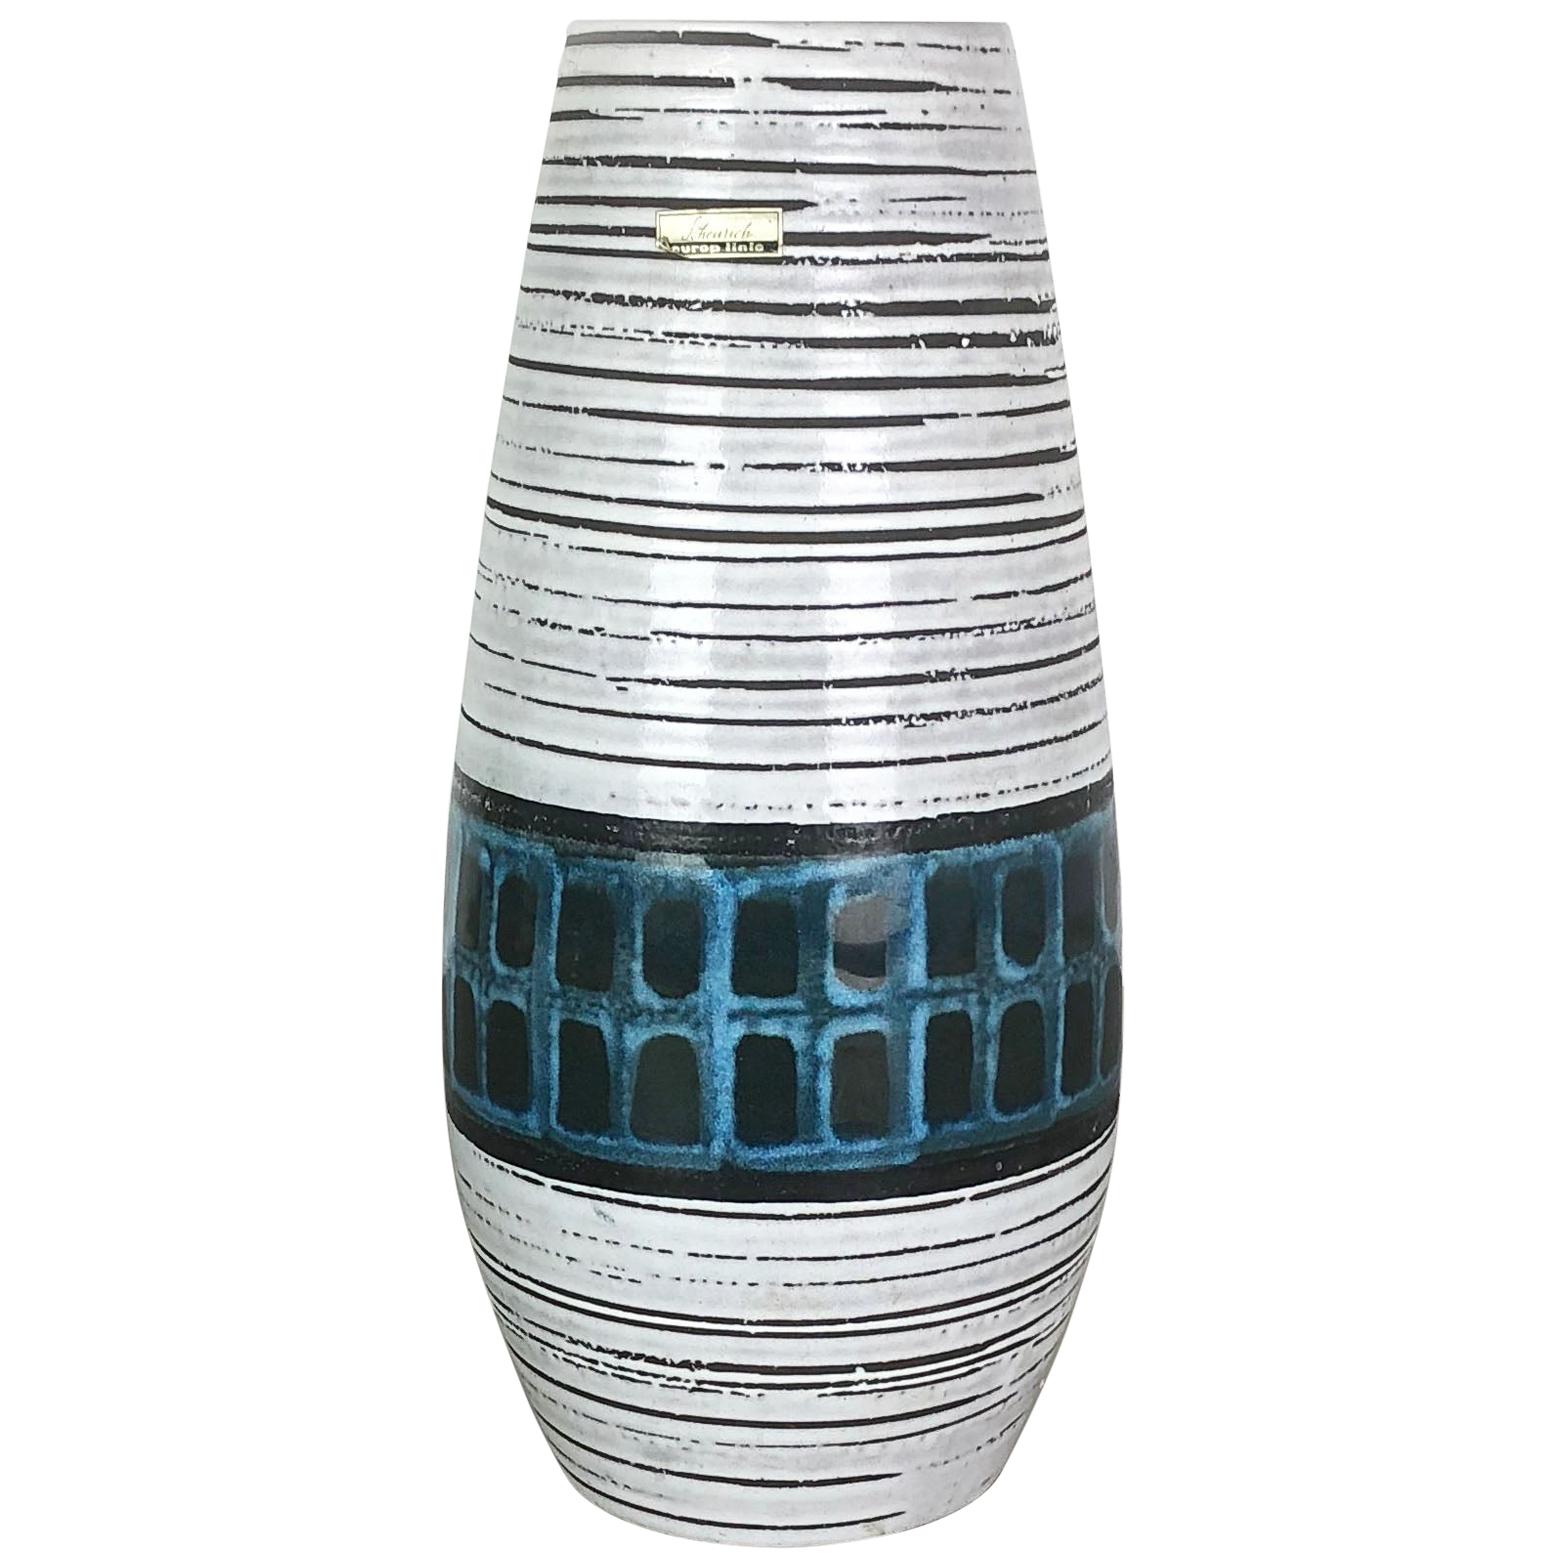 Large Multi-Color Vase Fat Lava "Europ Line" Vase by Scheurich, Germany, 1970s For Sale